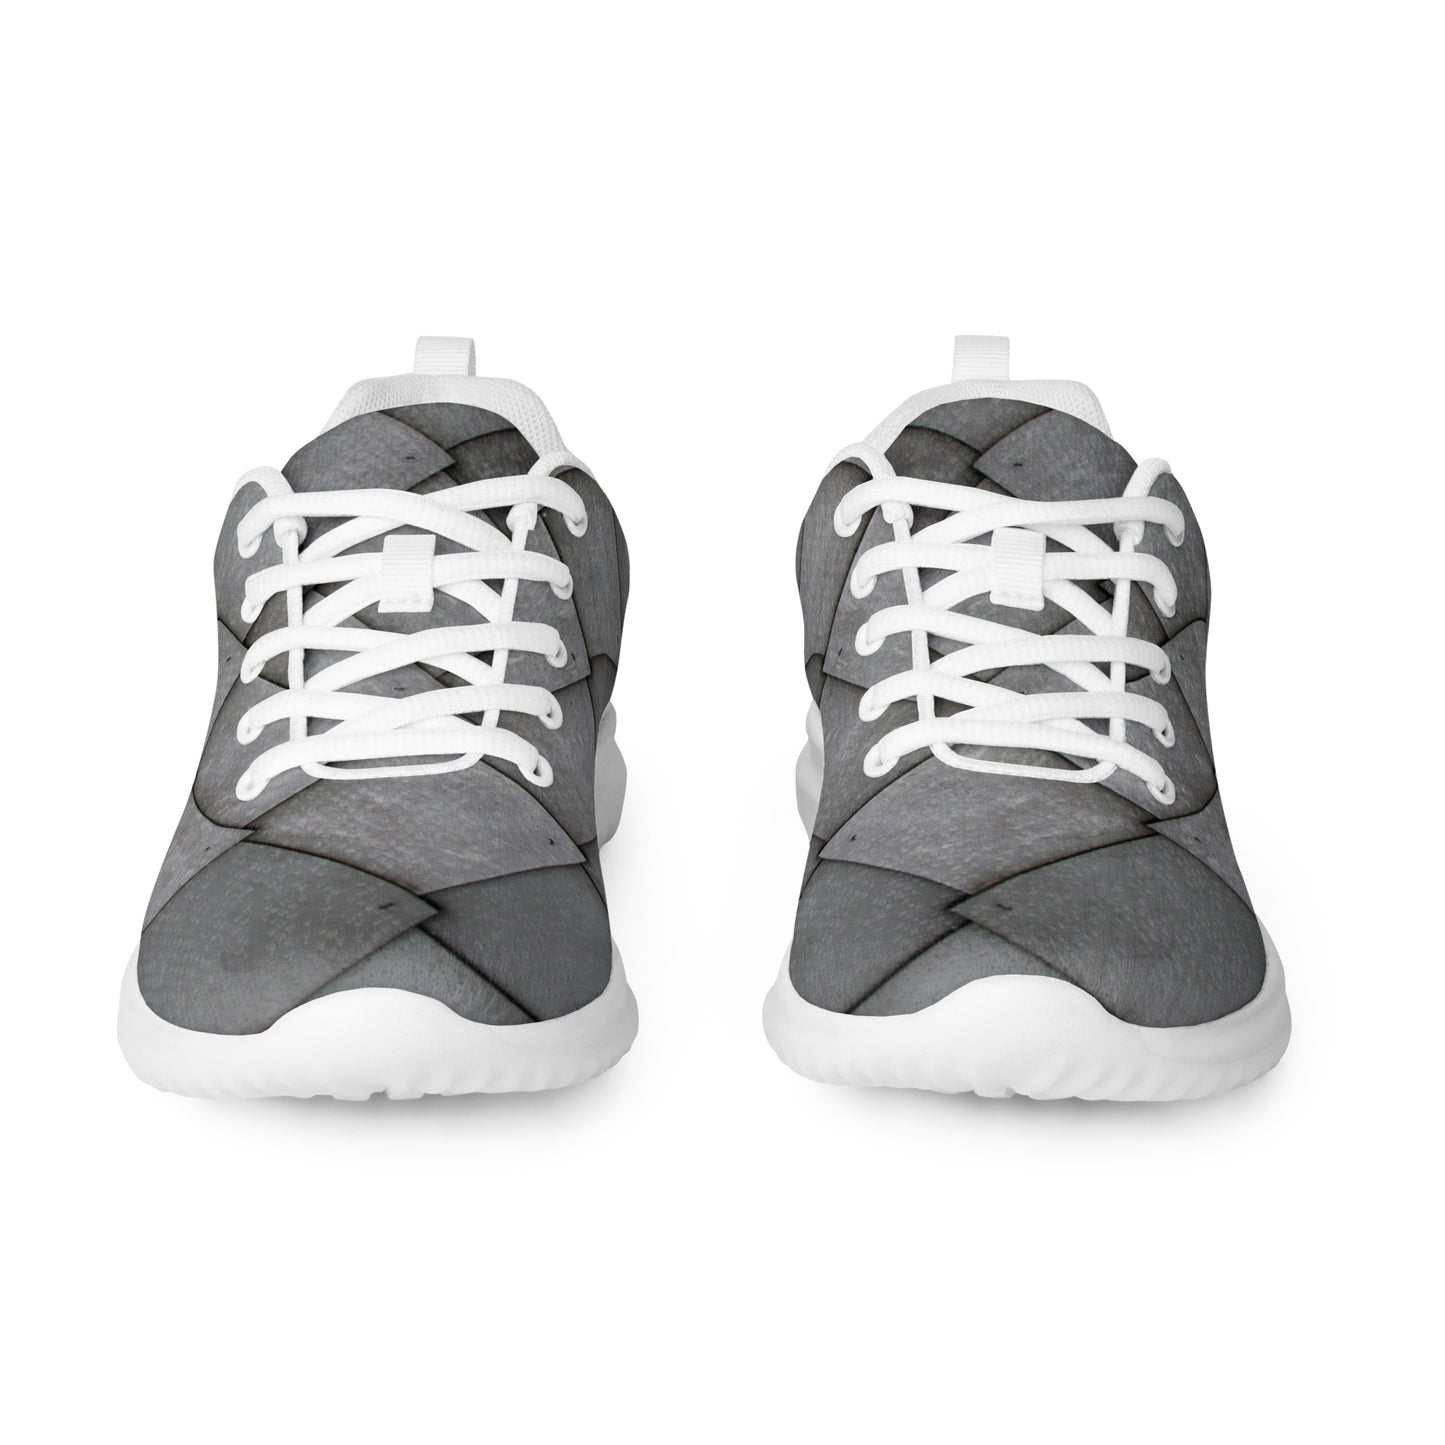 DASH Armour Men’s Athletic Shoes Lightweight Breathable Design by IOBI Original Apparel